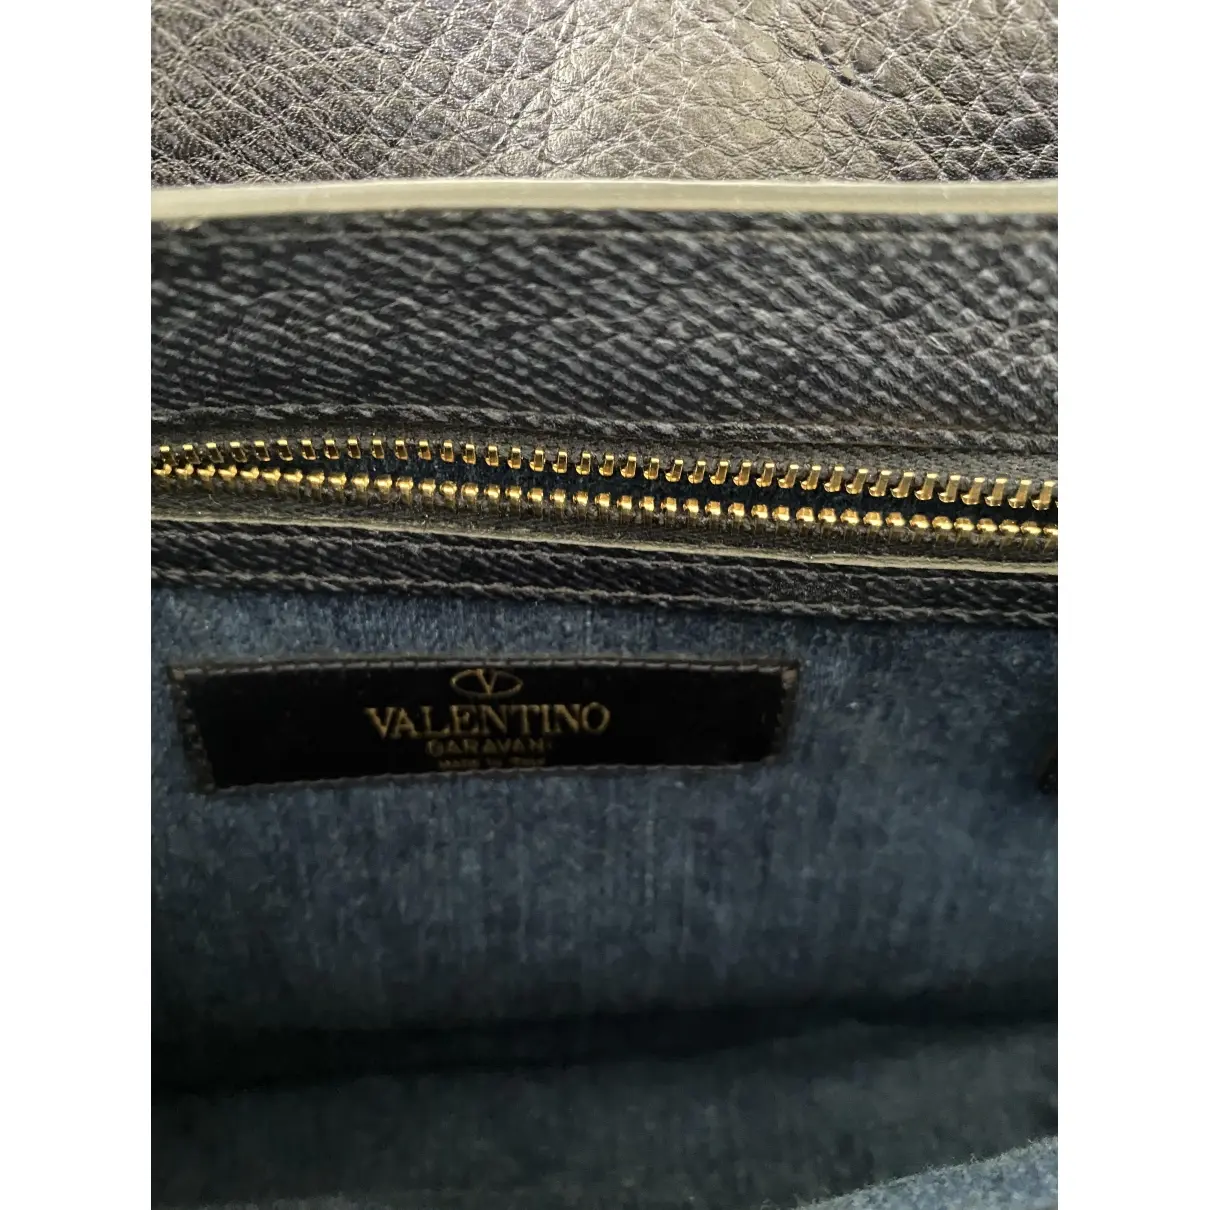 Buy Valentino Garavani B-rockstud crossbody bag online